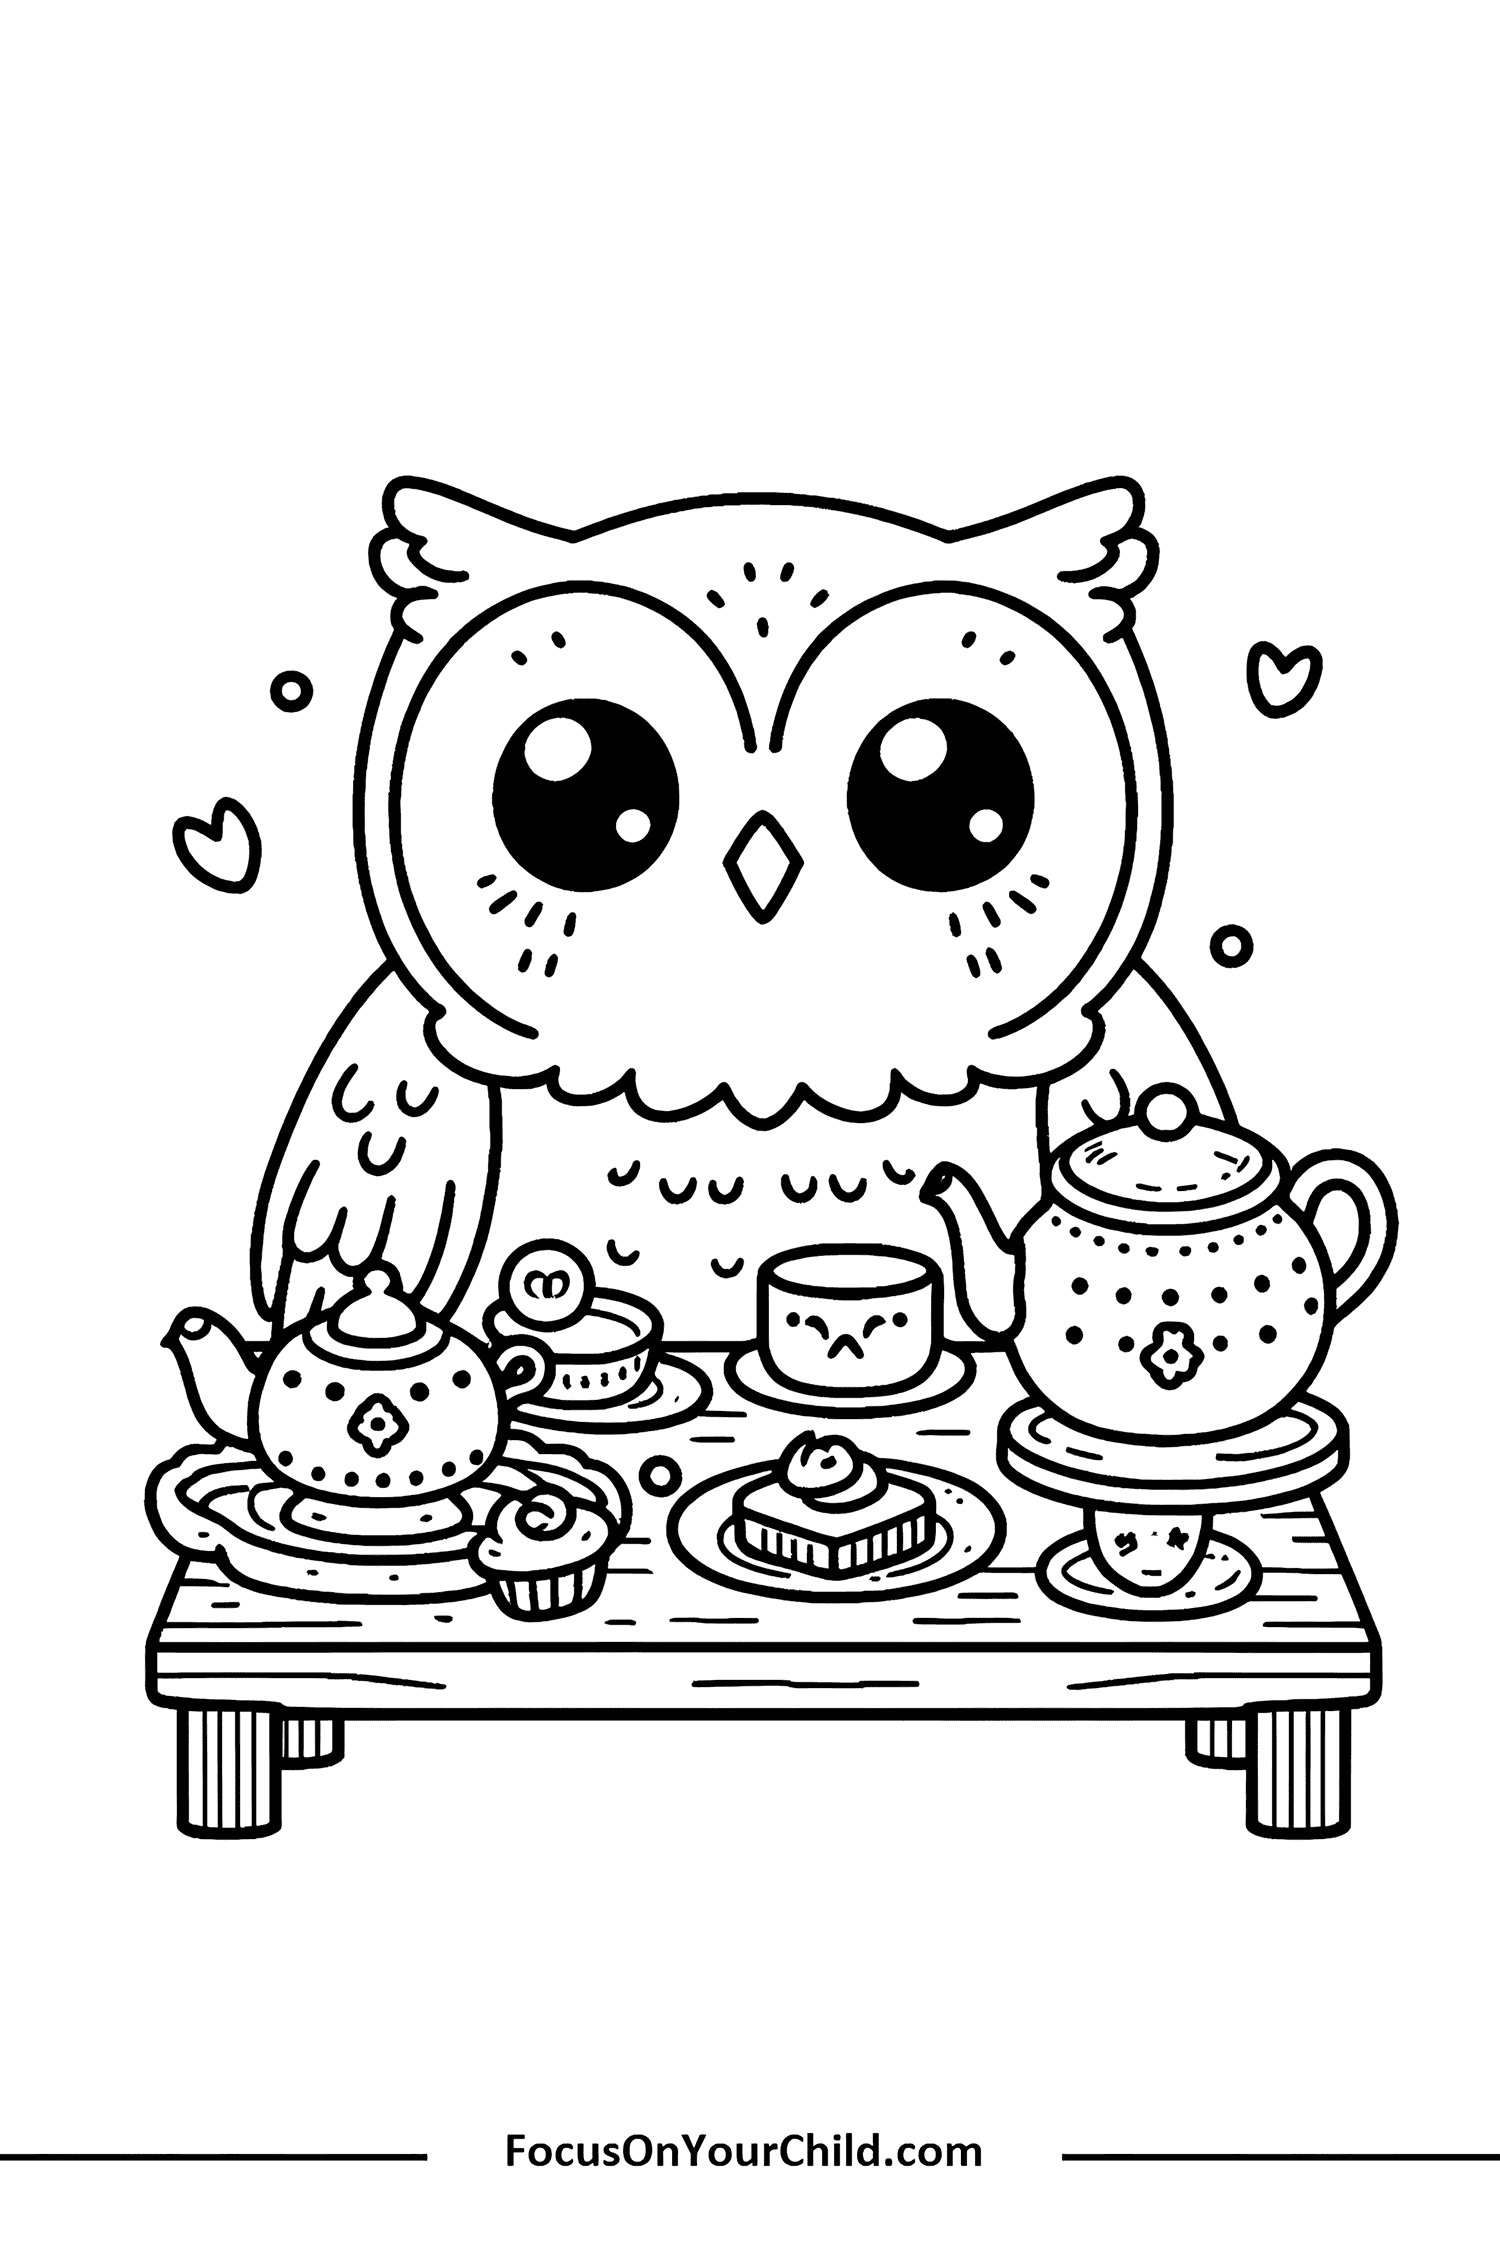 Charming cartoon owl enjoying a tea party with treats and heart shapes.